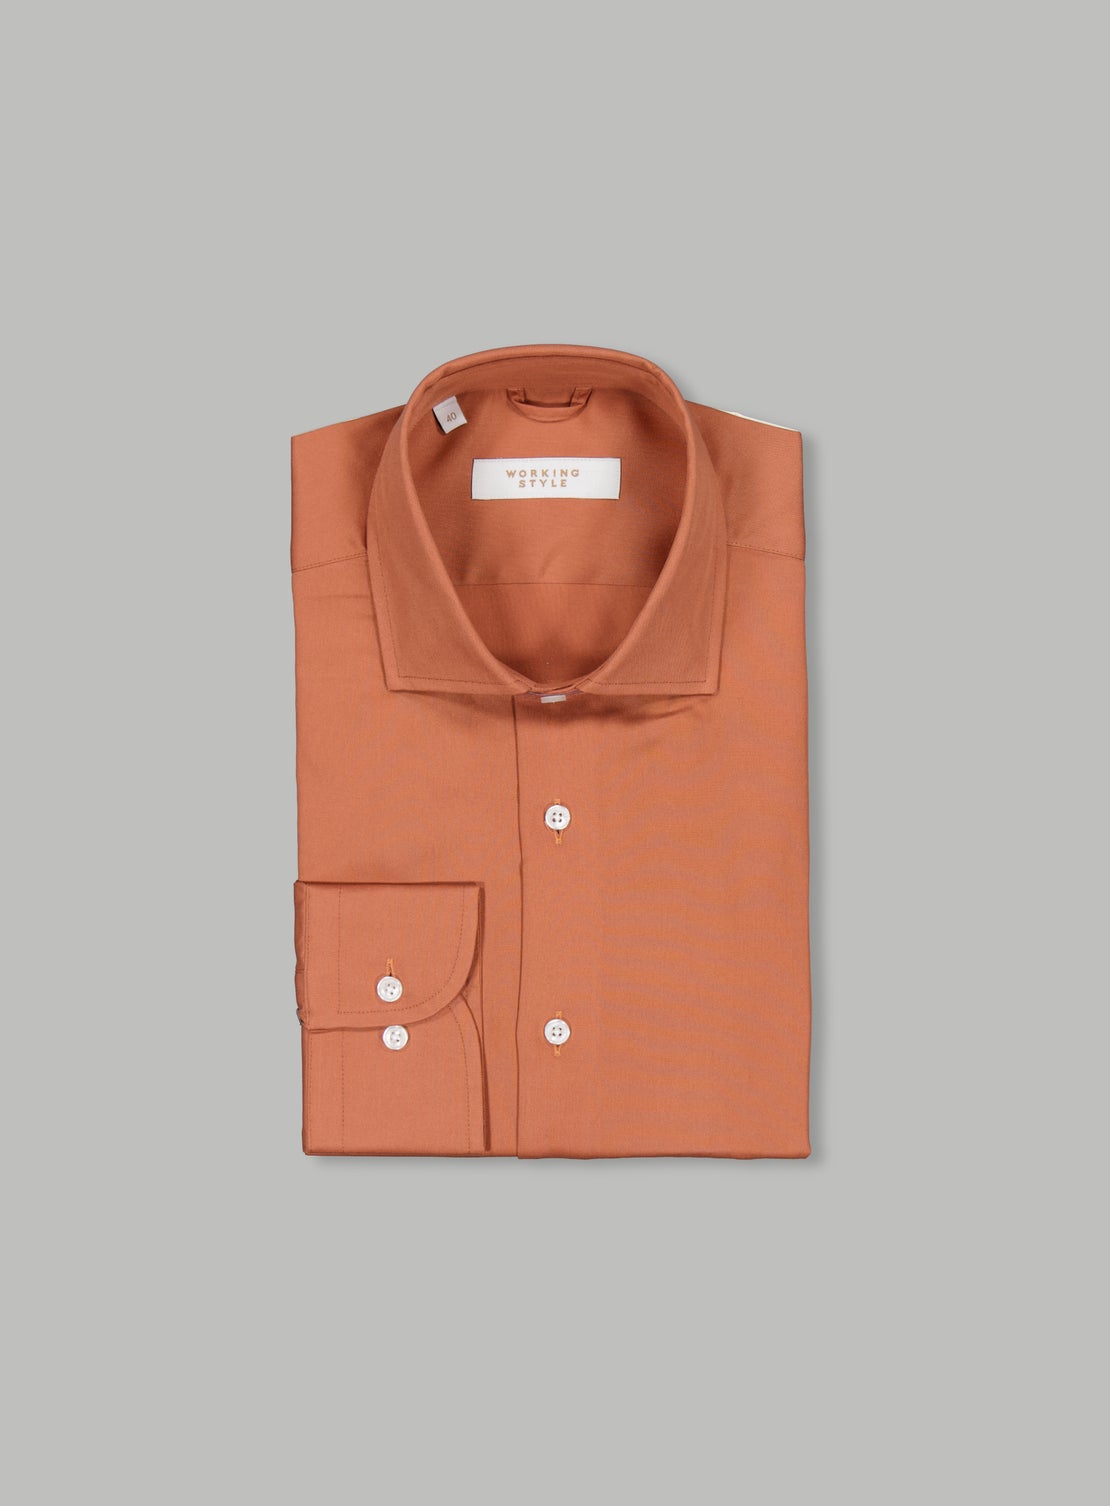 Vinny Orange Tencel Shirt